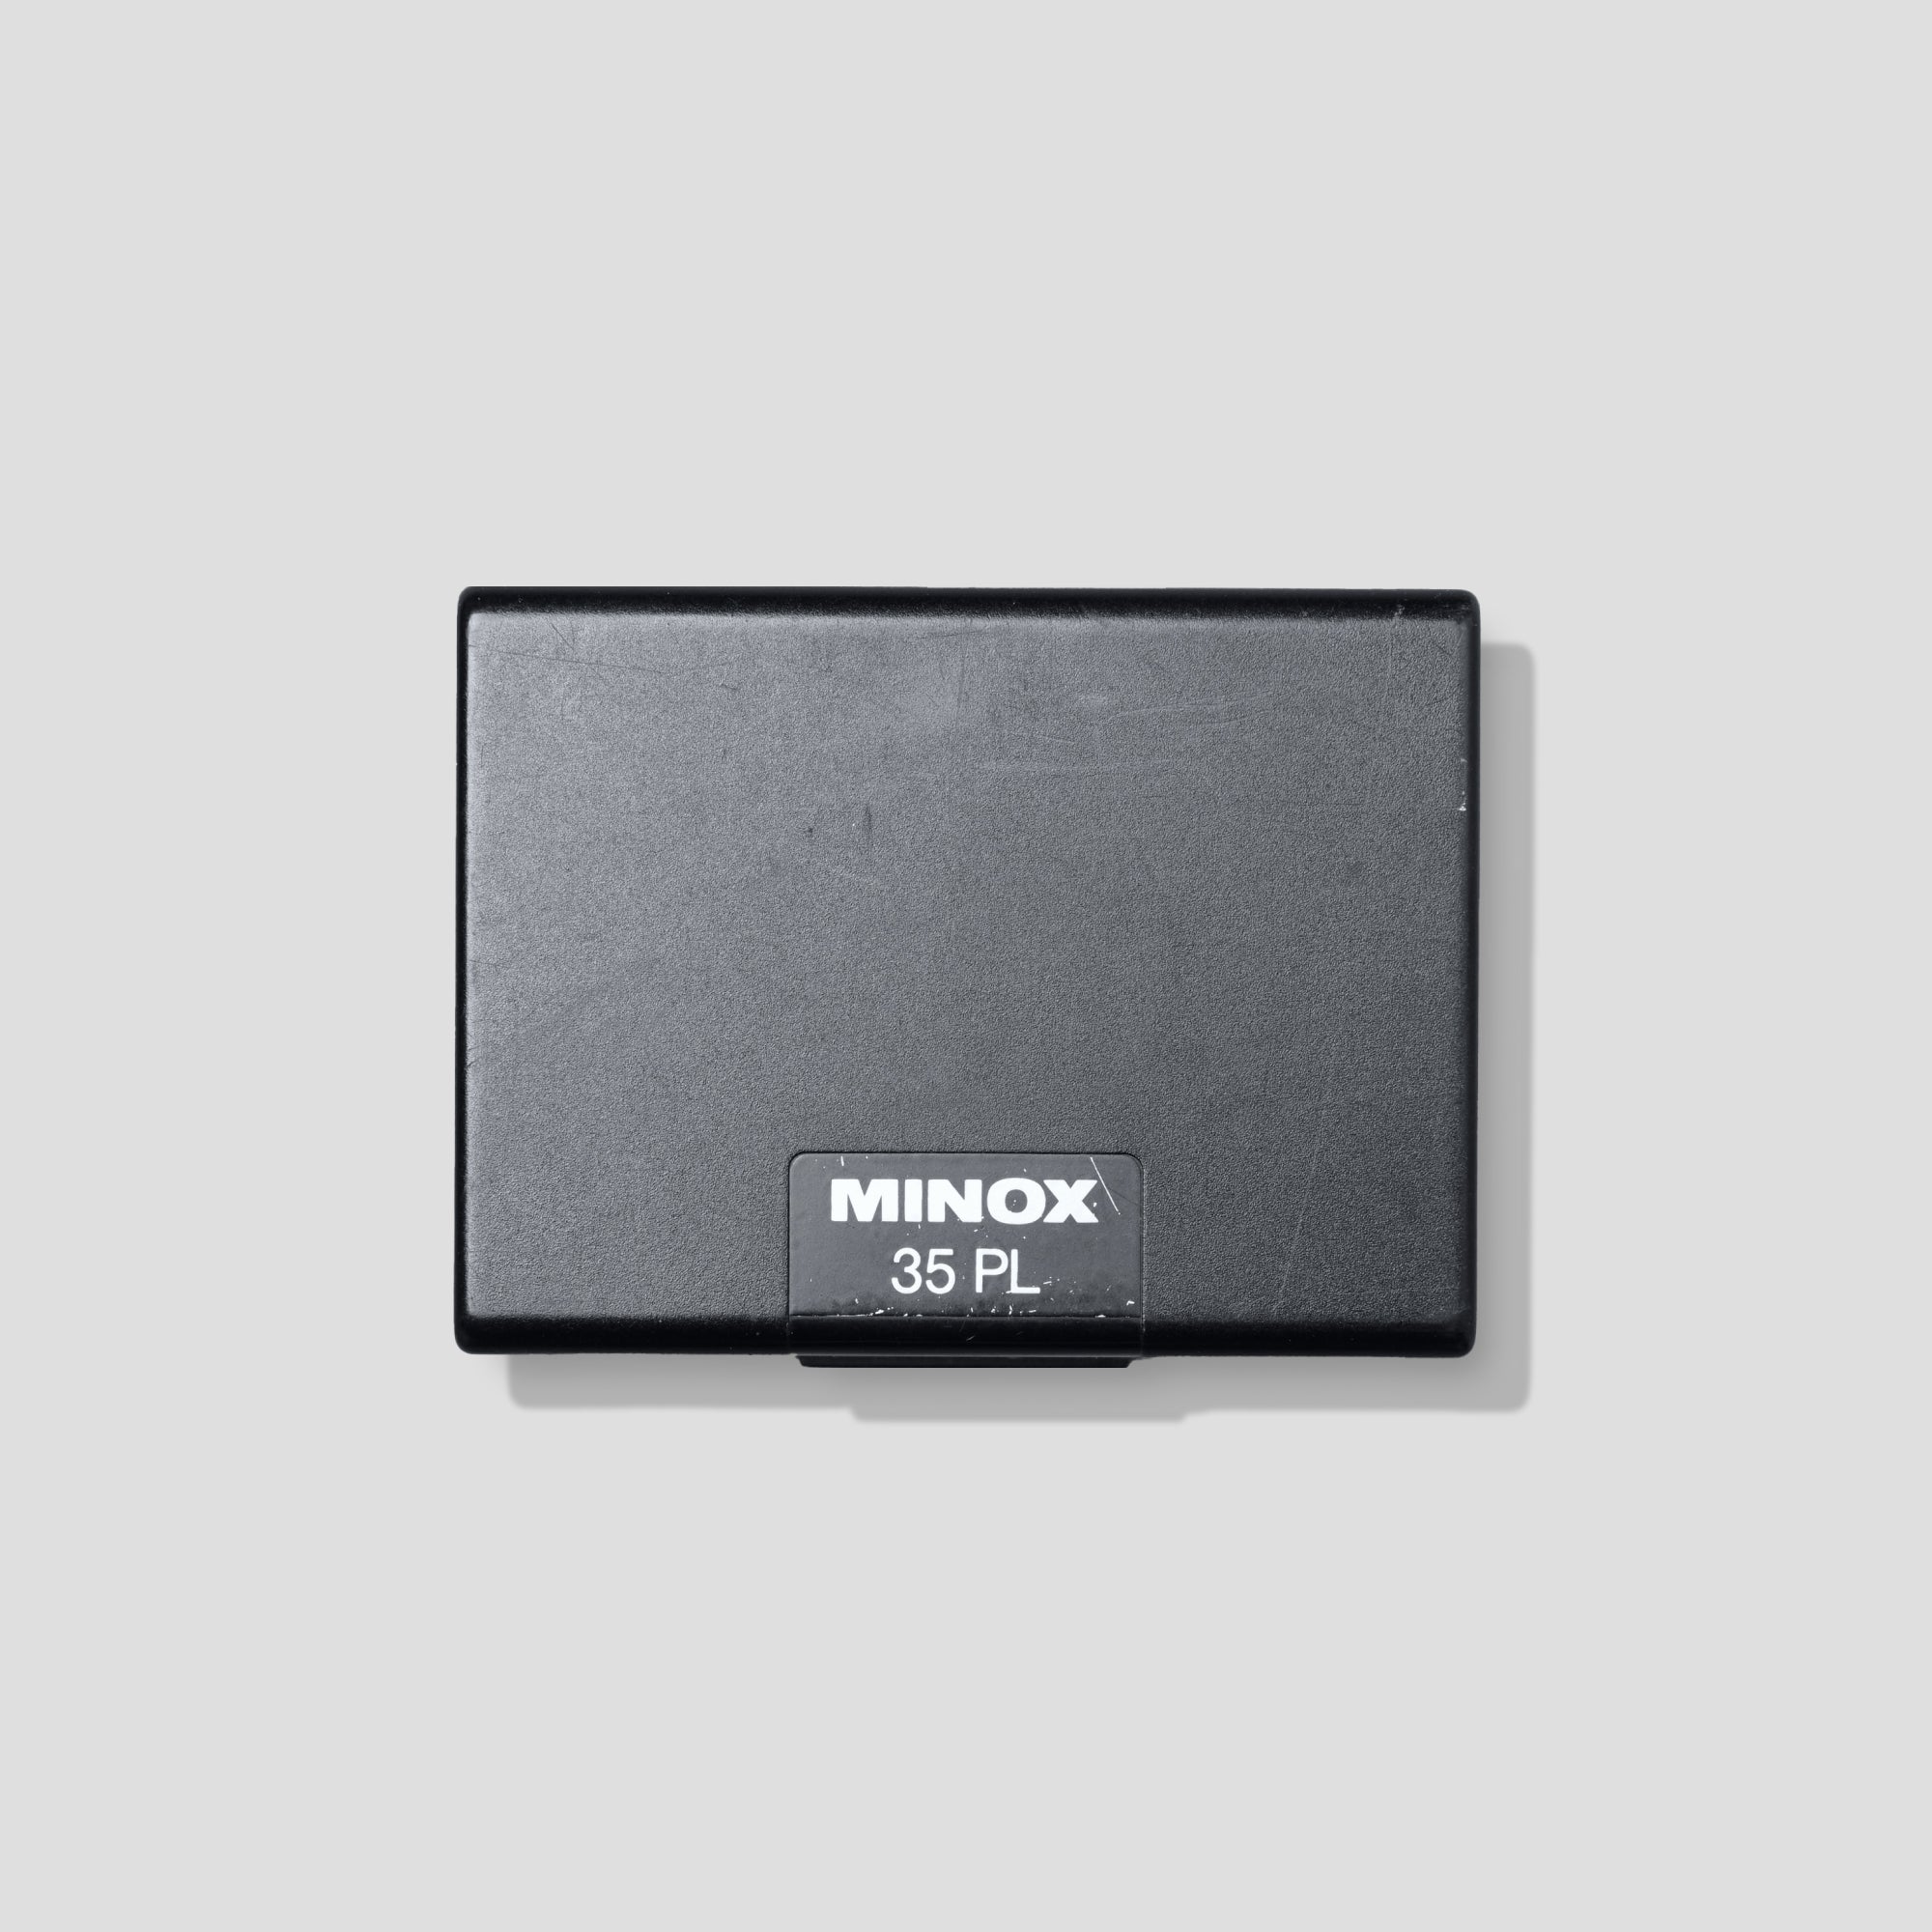 Buy Minox 35 PL now at Analogue Amsterdam